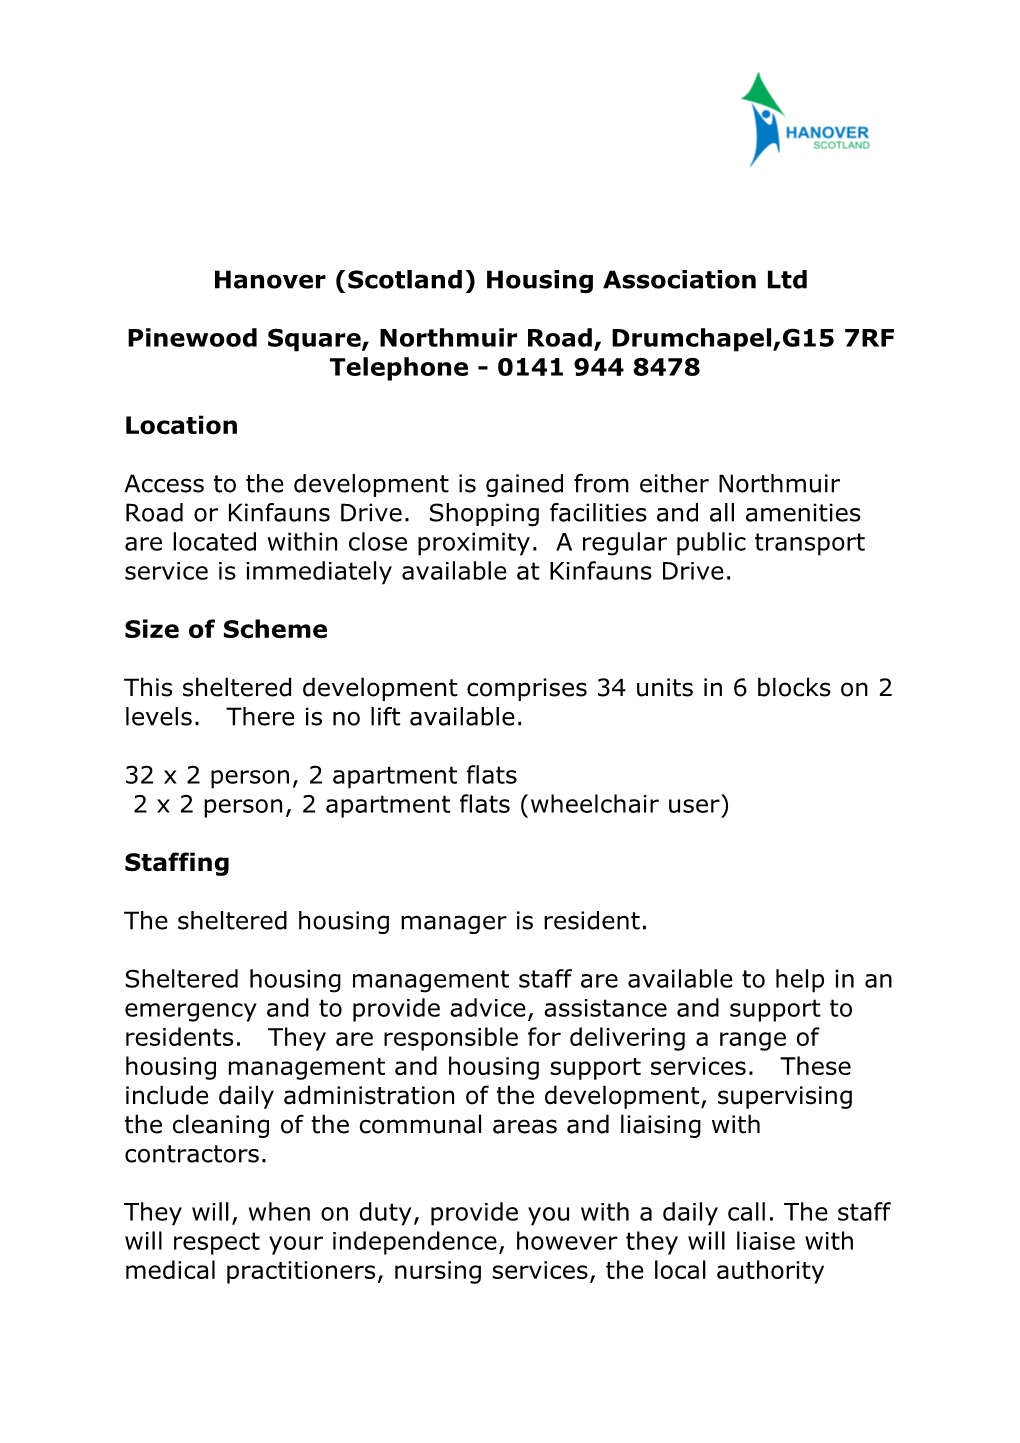 Hanover (Scotland) Housing Association Ltd s2